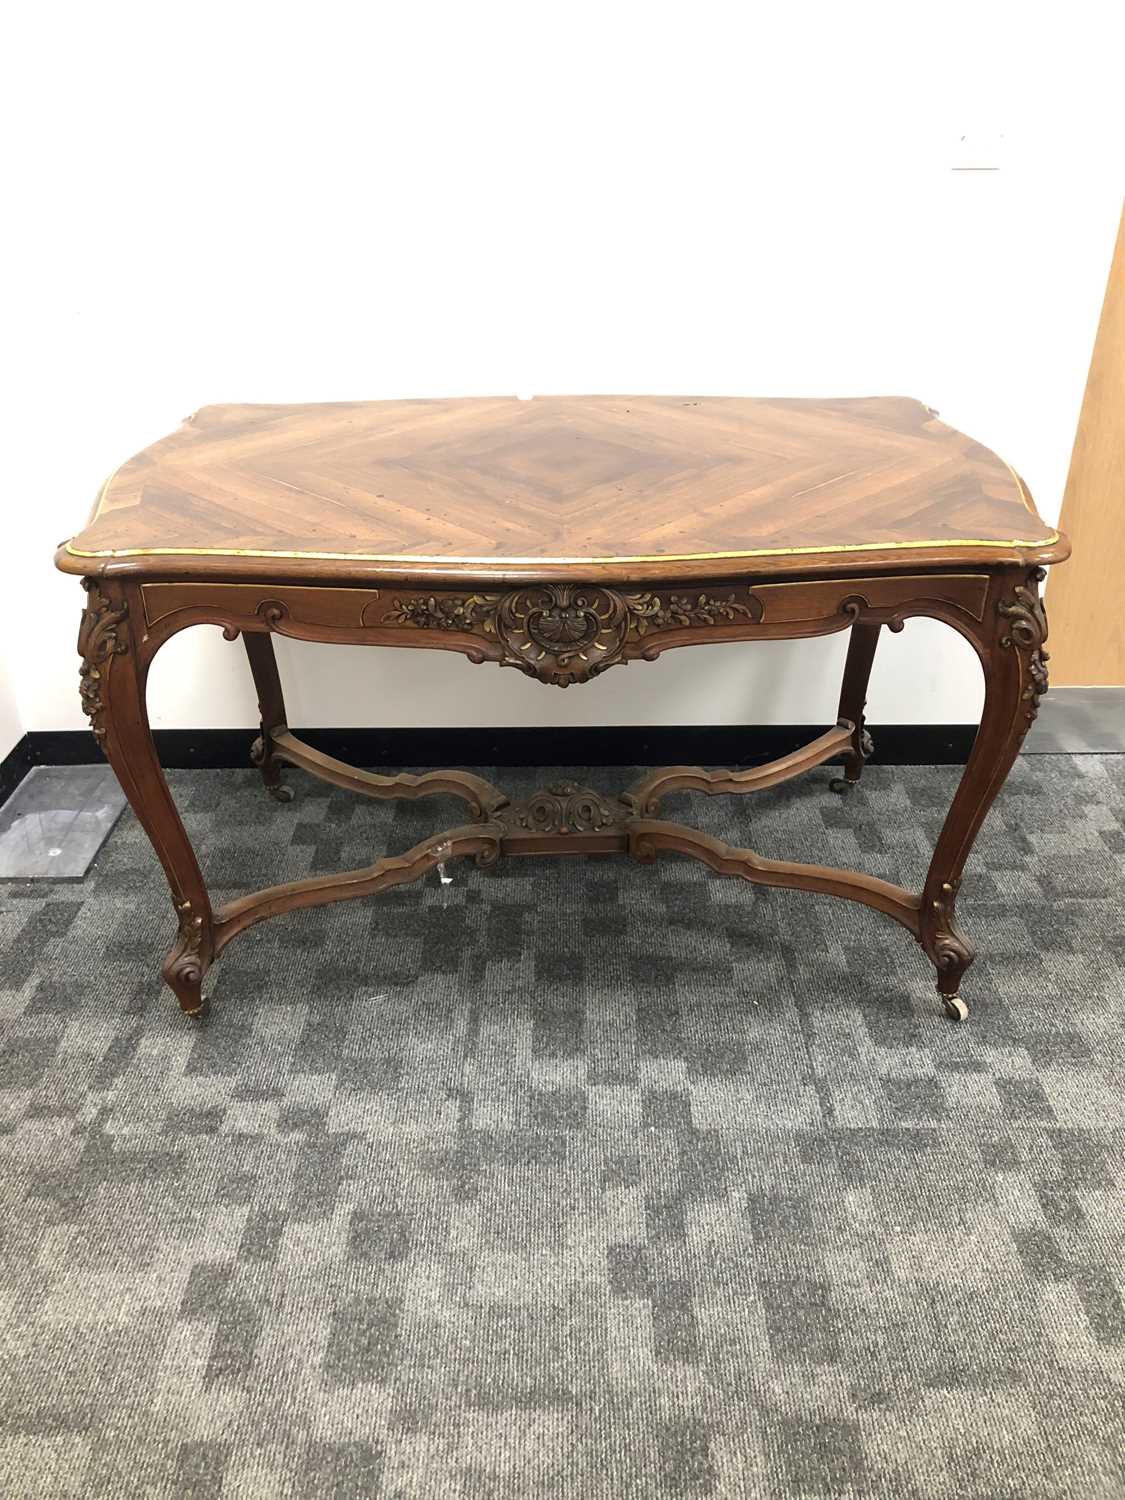 Lot 26 - A 19th century Continental crossbanded mahogany table